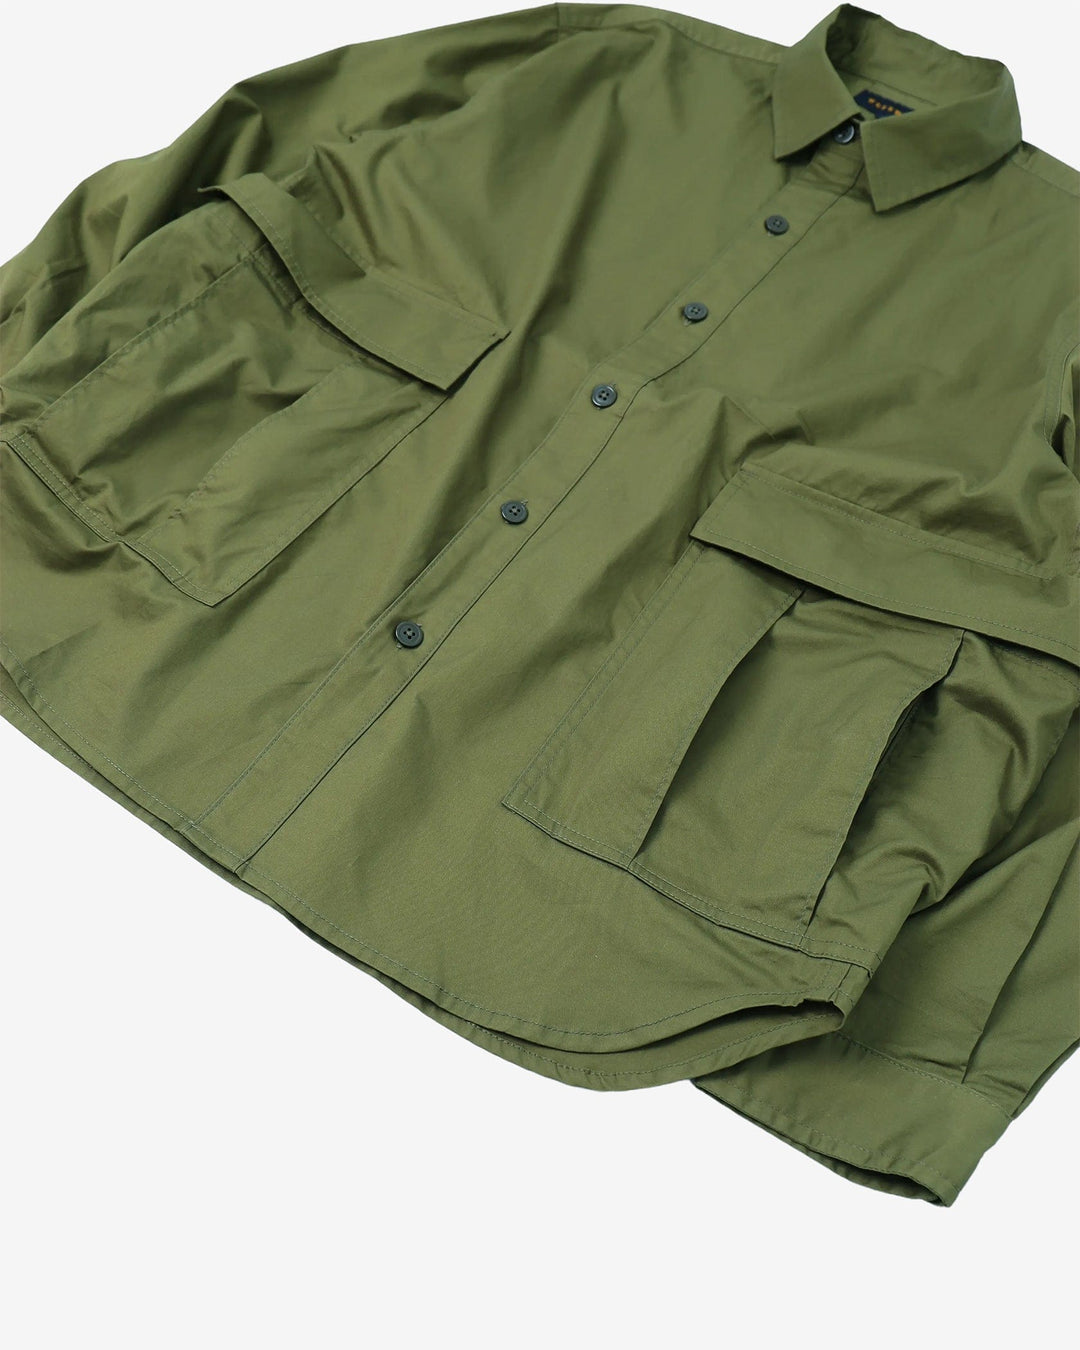 Workware - M51 Shirt #600 - Green